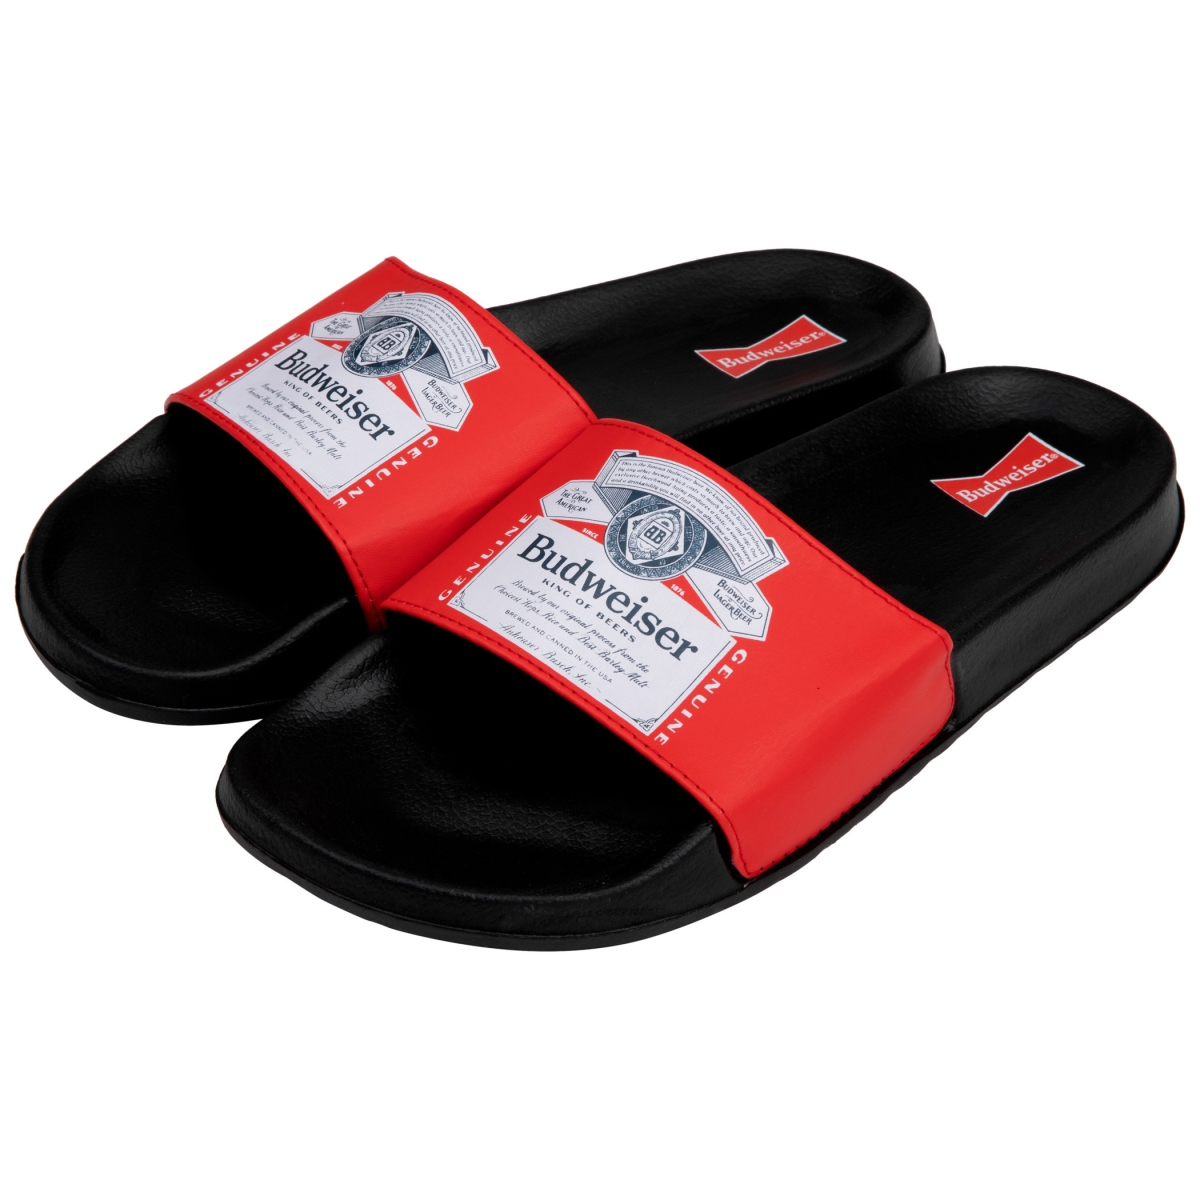 Picture of Budweiser 850811-13-14 Budweiser Logo Label Soccer Slides Adult Sandals - Size 13-14